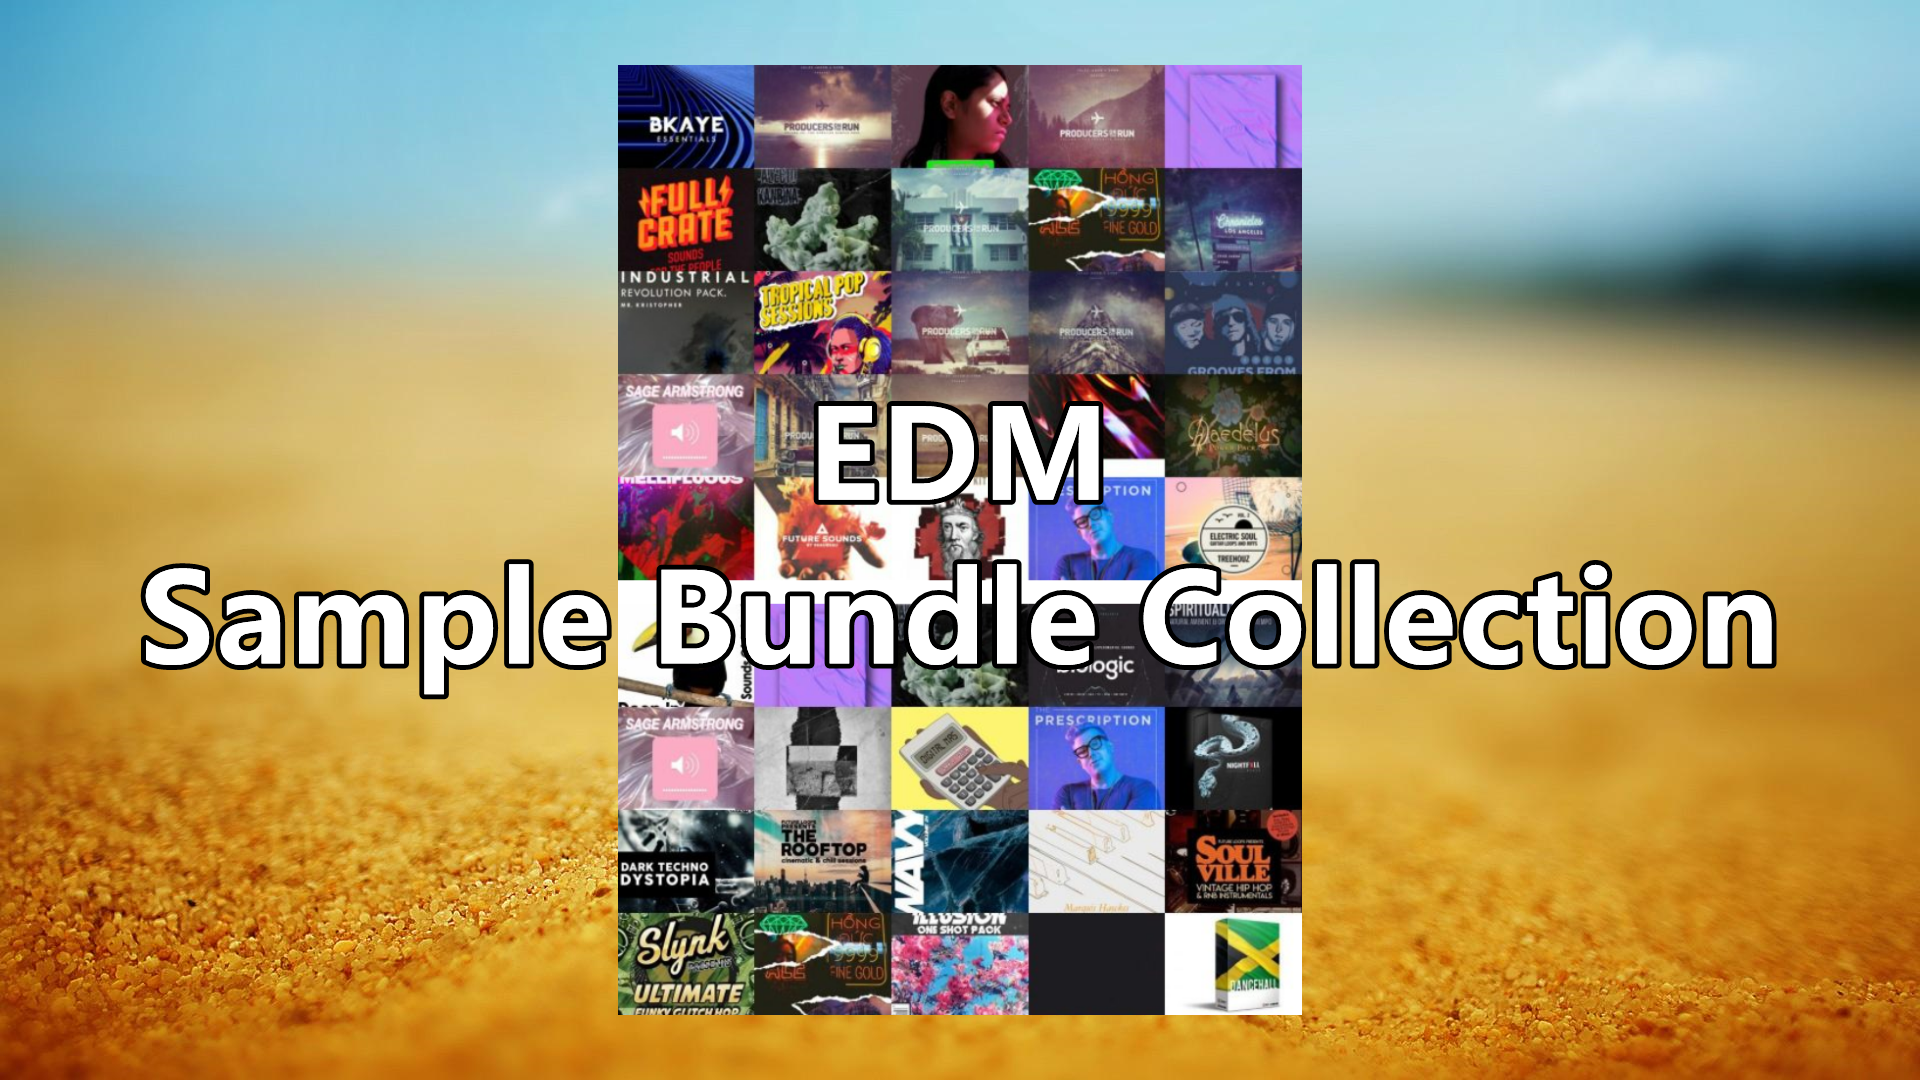 【EDM多风格采样包合集】EDM Sample Bundle Collection